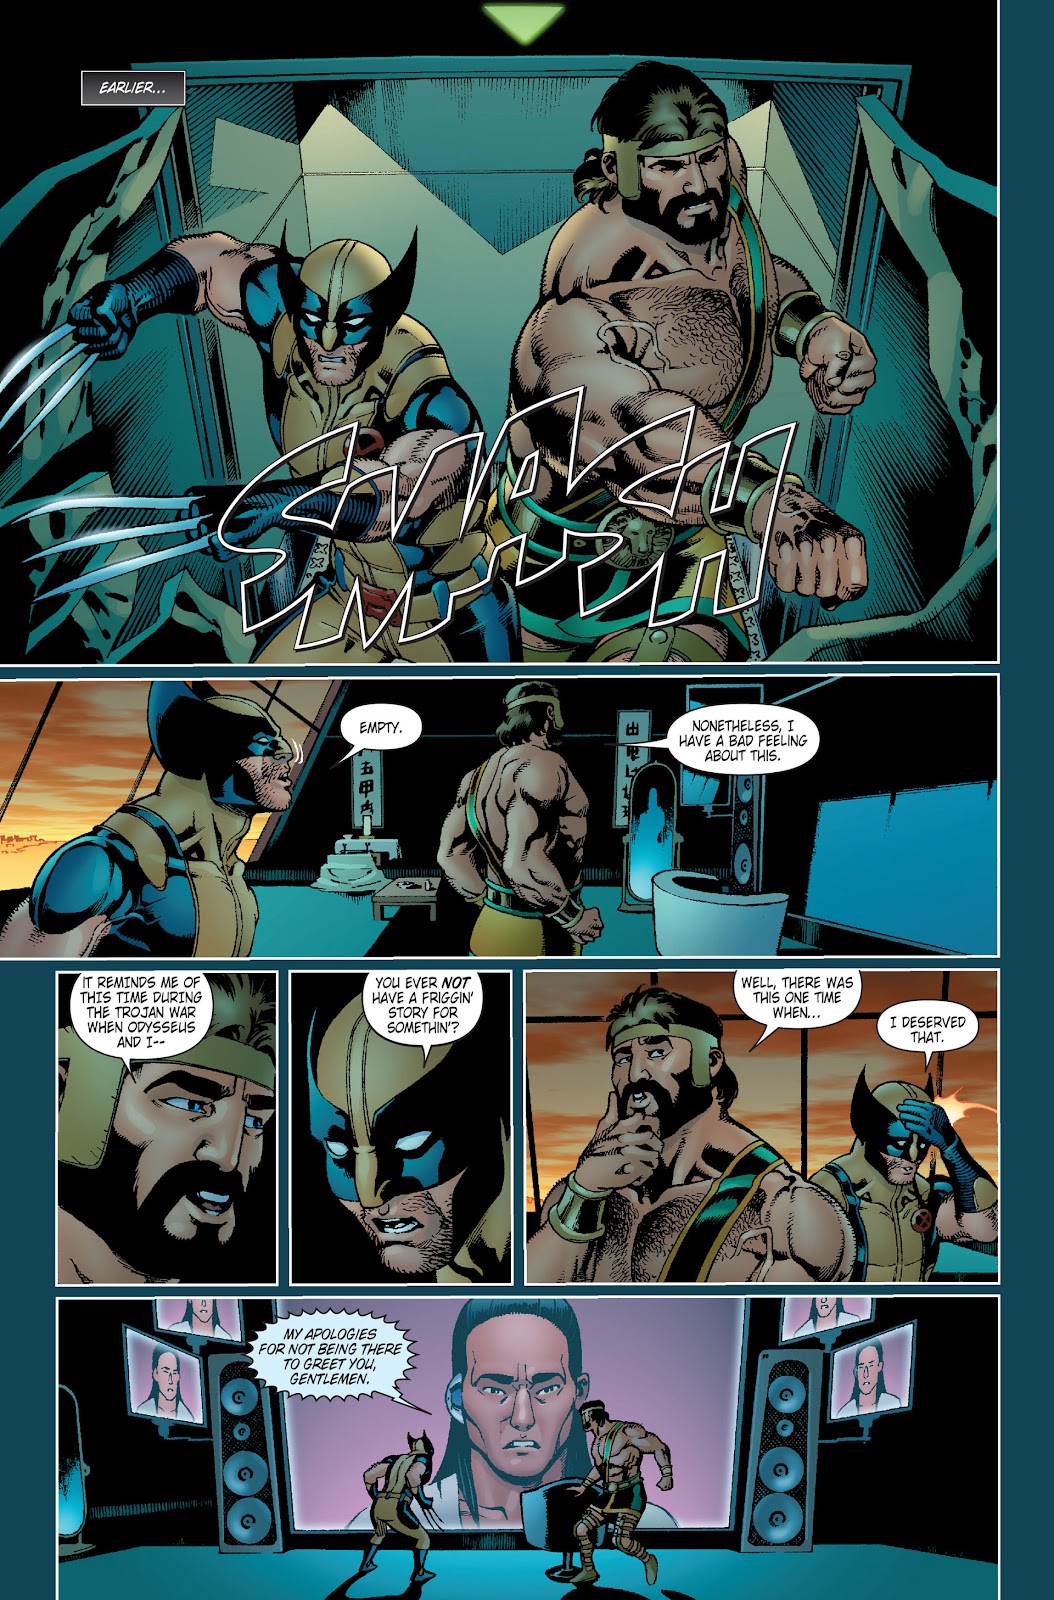 Wolverine/Hercules: Myths, Monsters & Mutants review